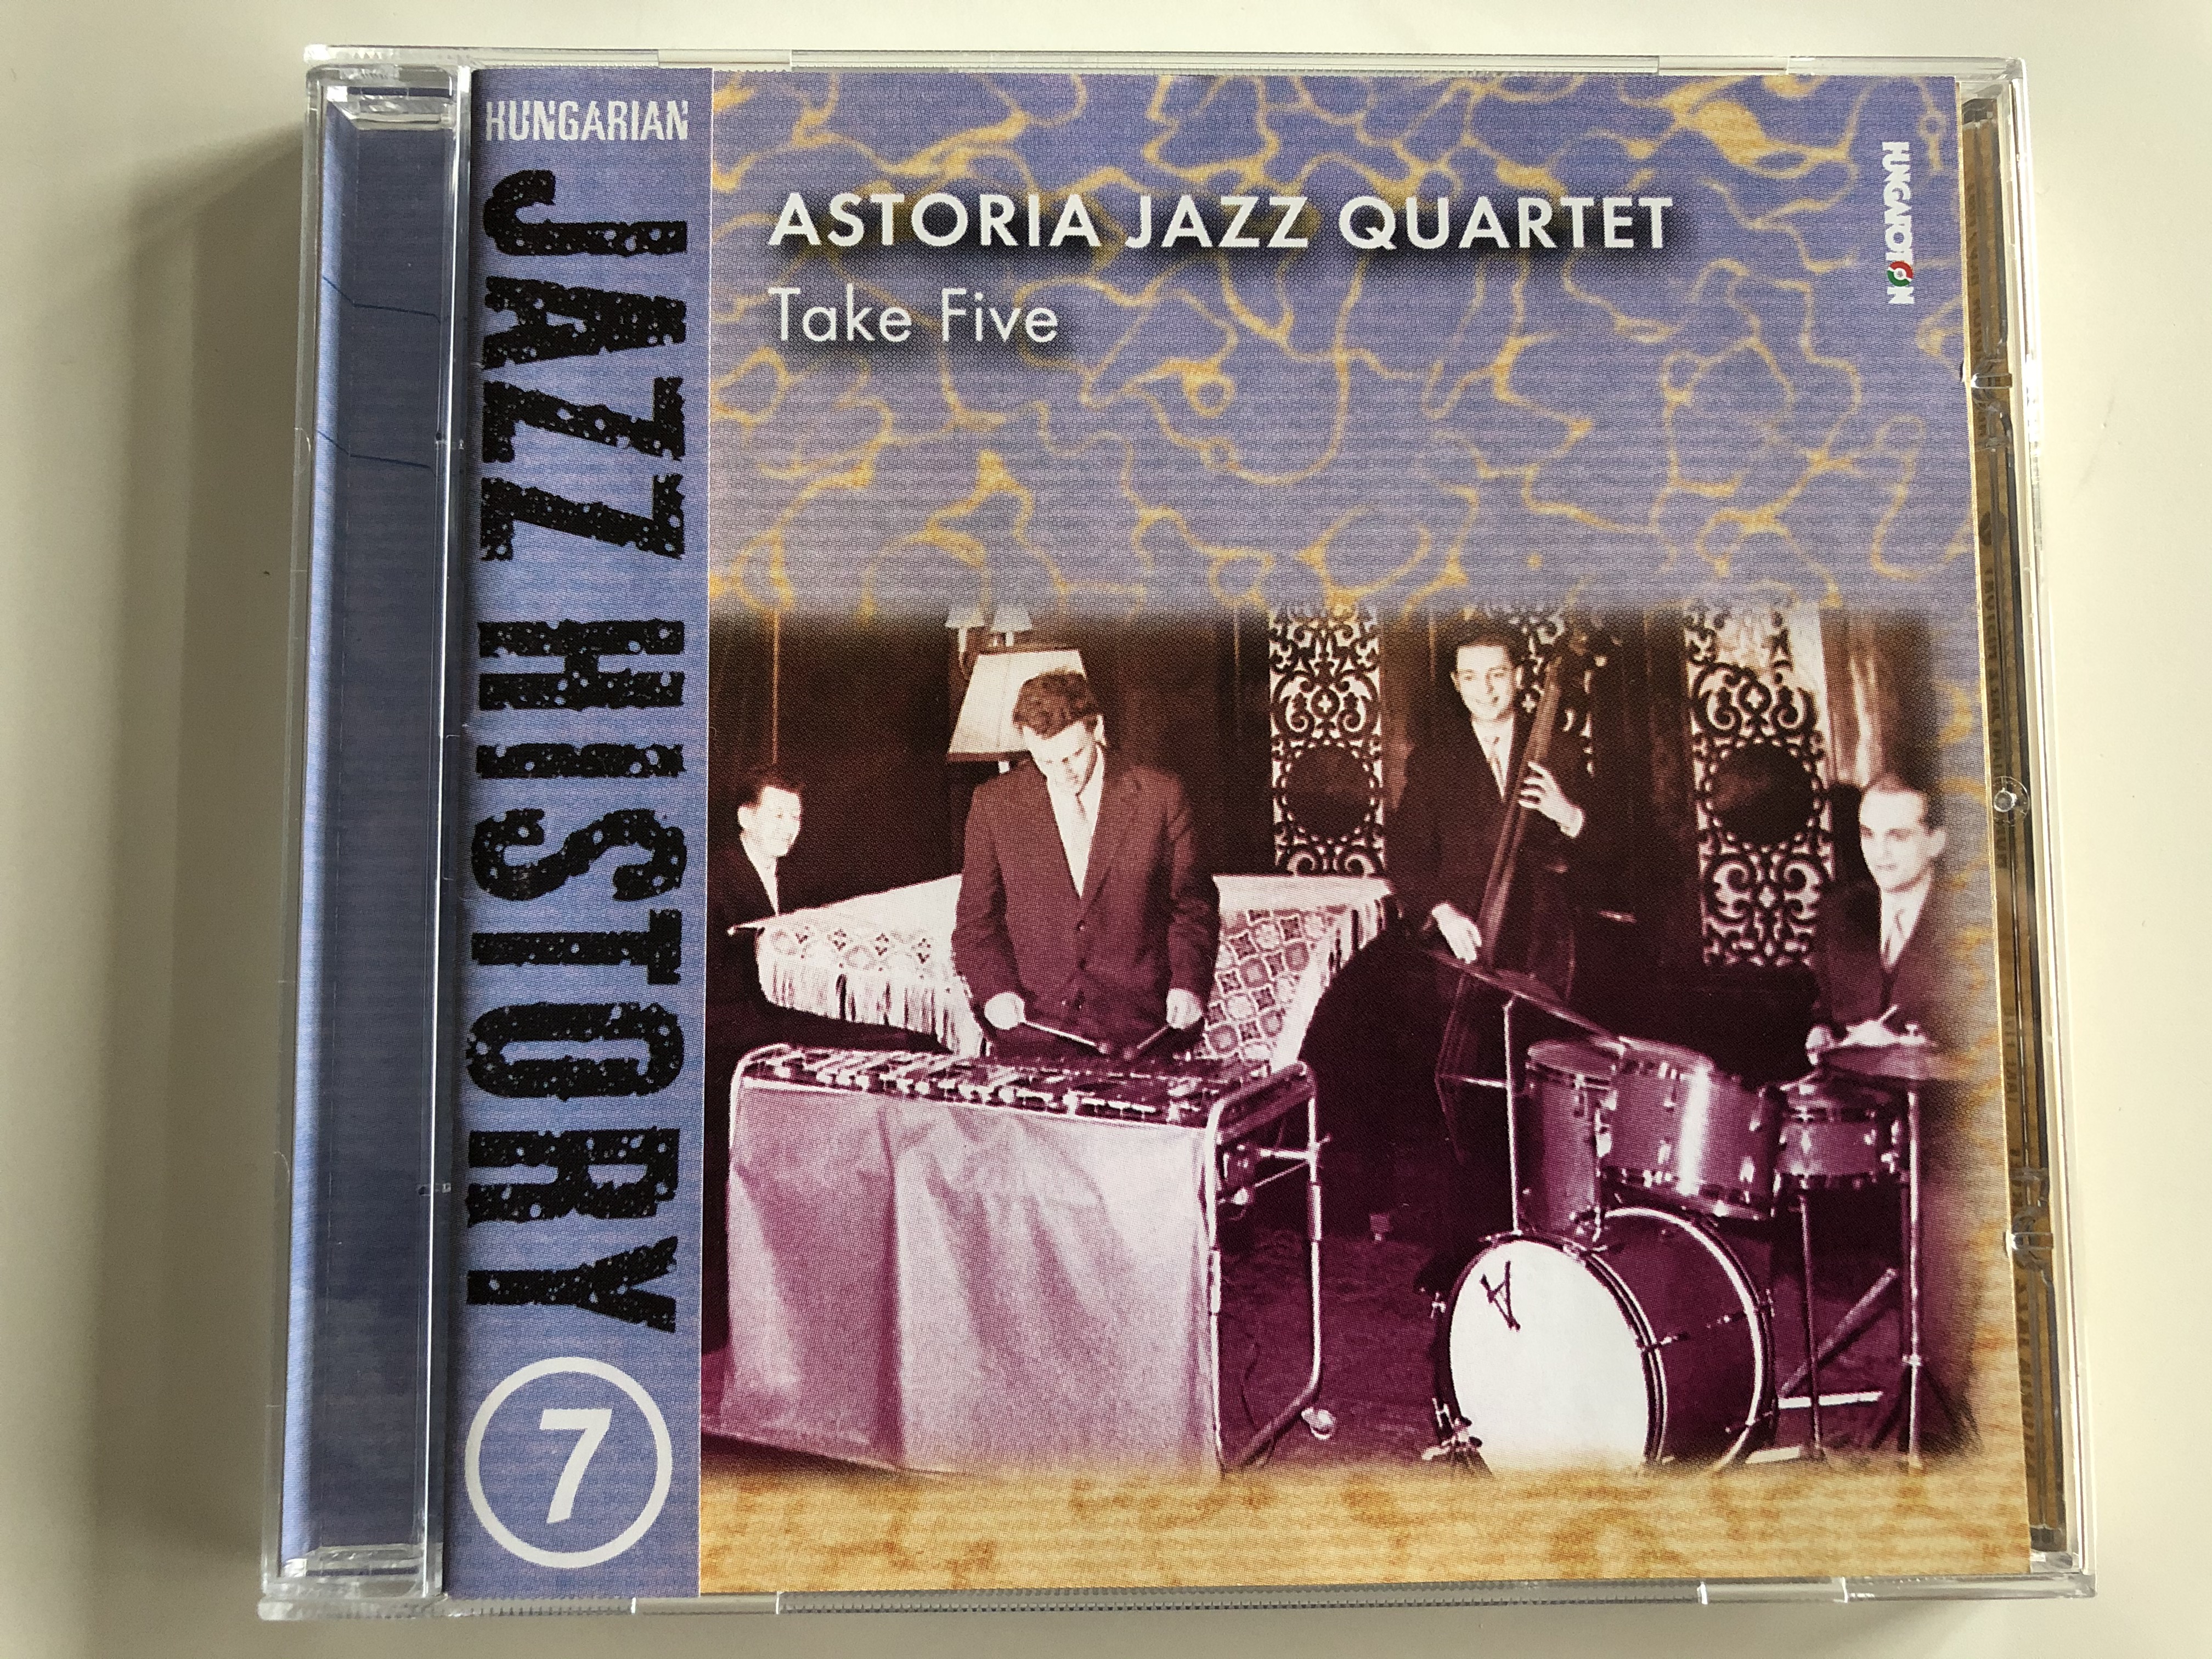 astoria-jazz-quartet-take-five-hungarian-jazz-history-7-hungaroton-audio-cd-2001-hcd-71082-1-.jpg